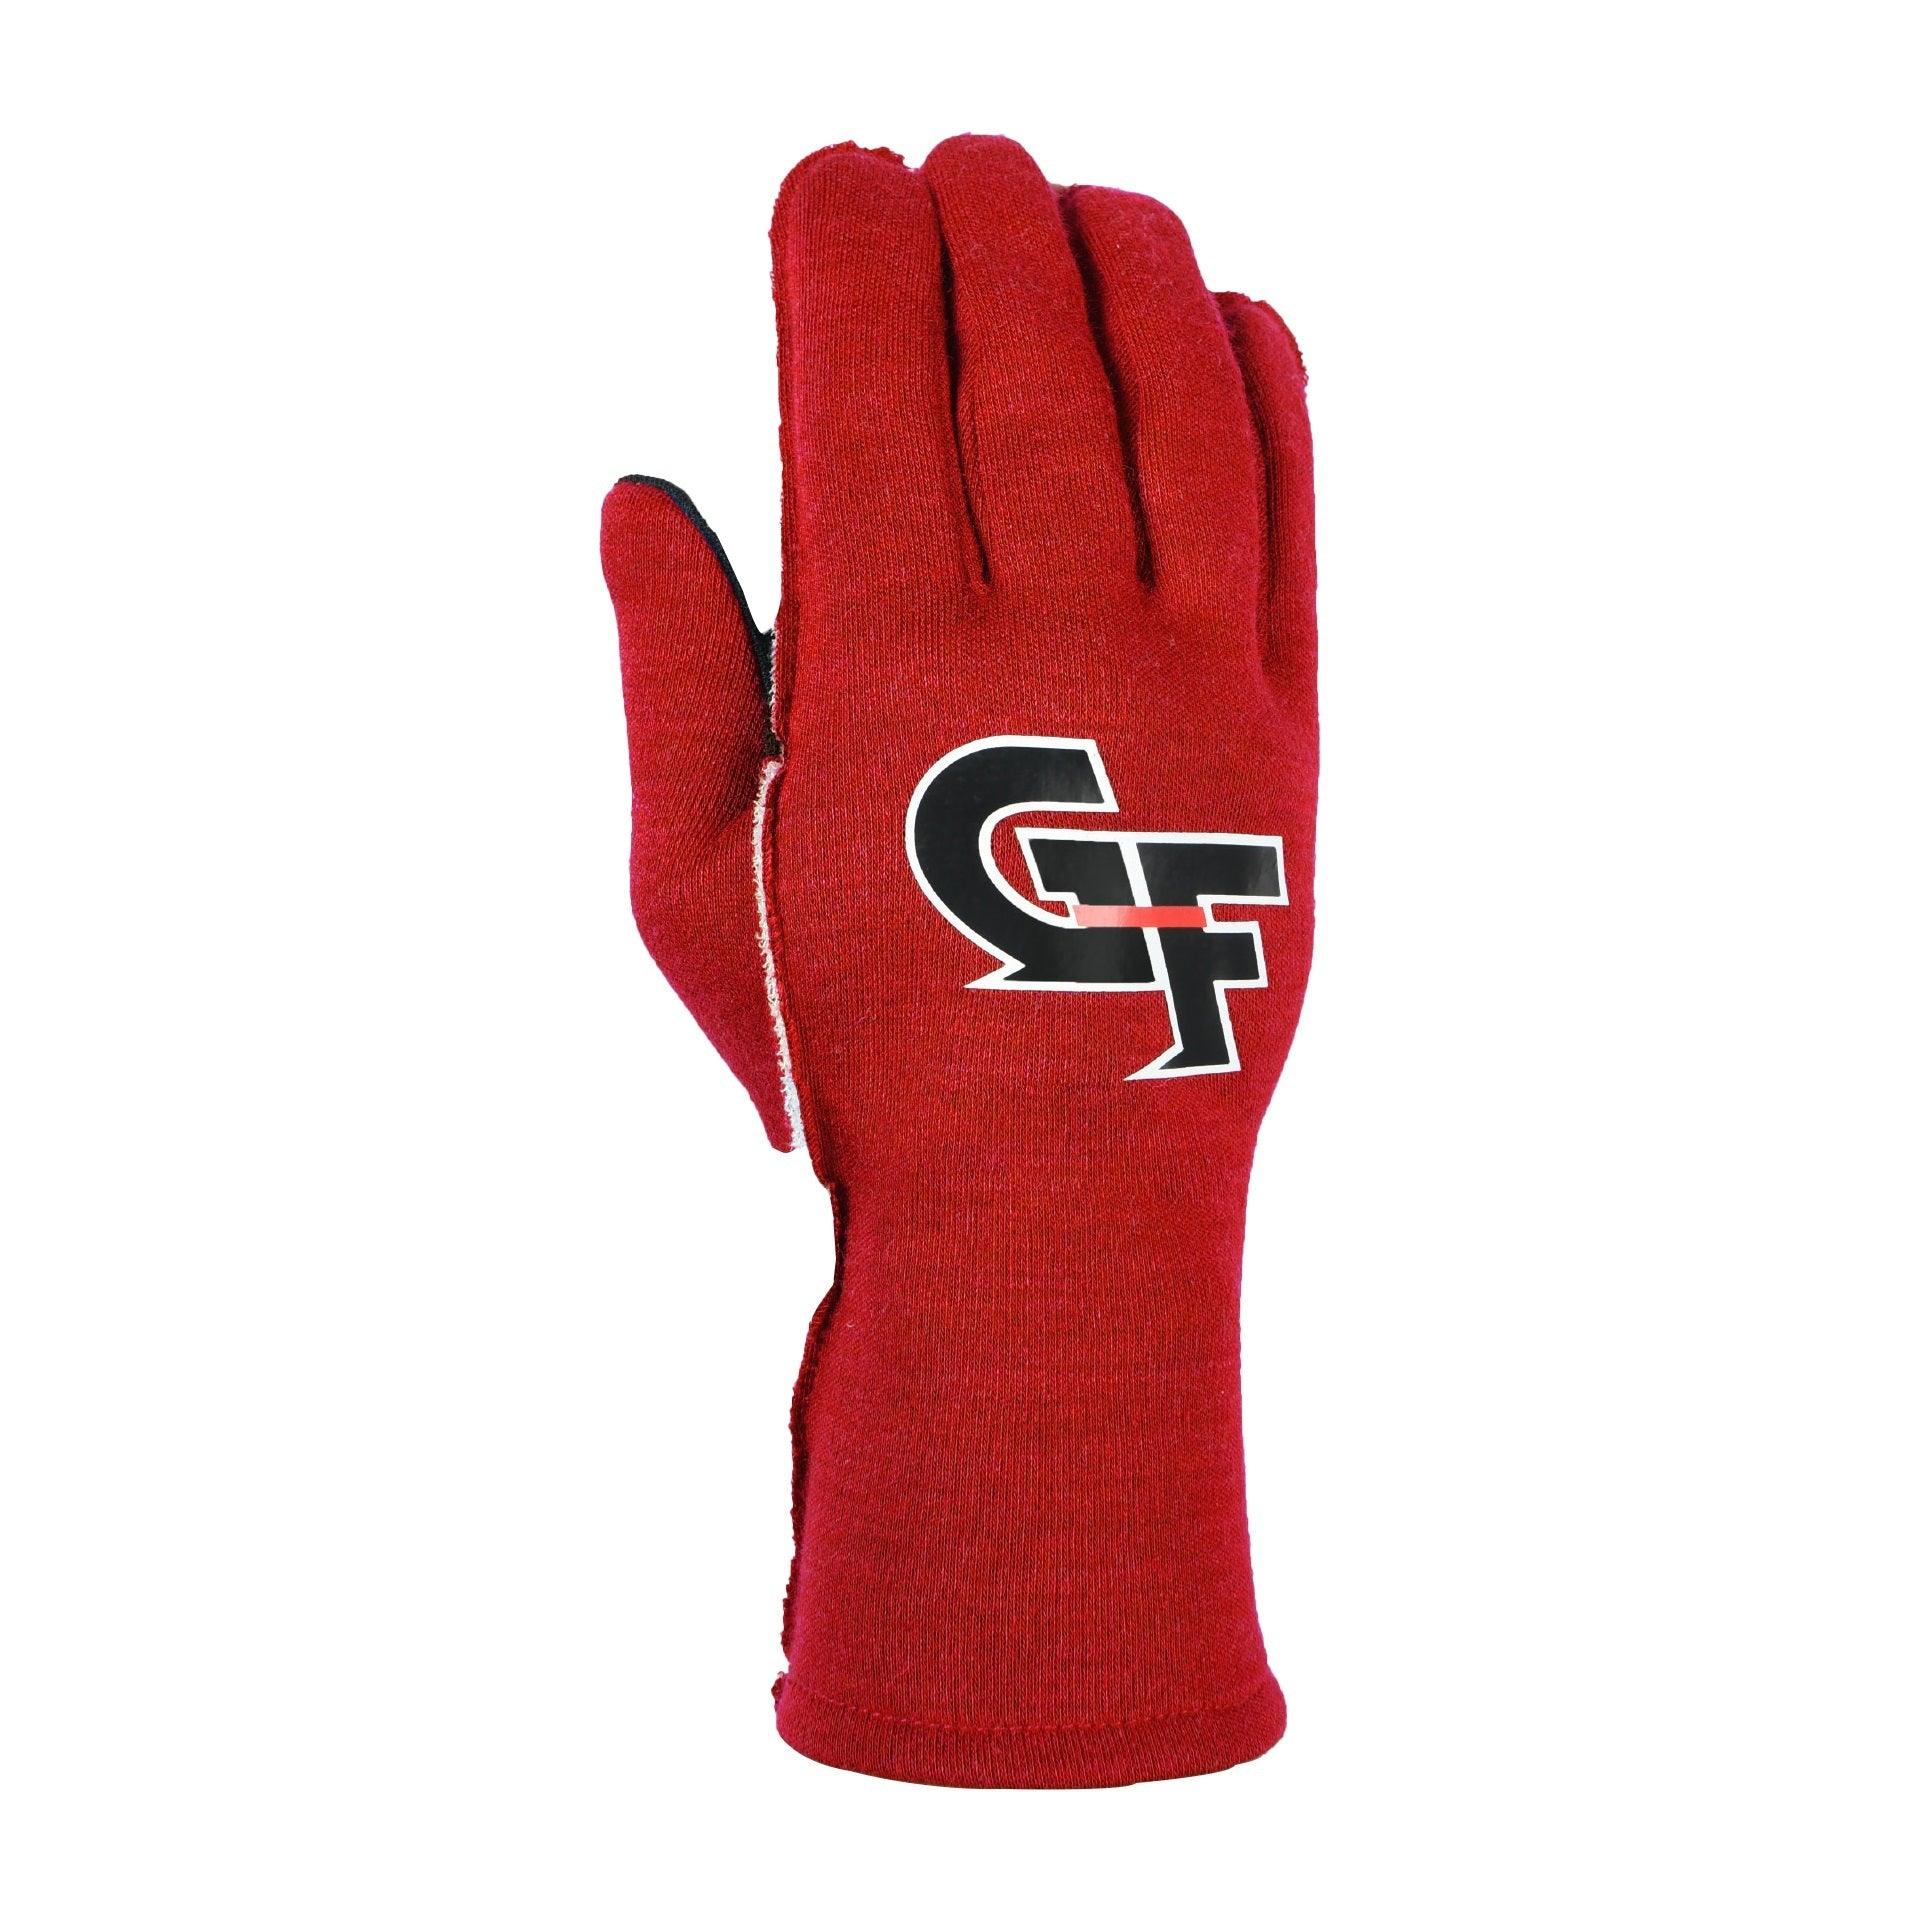 Gloves G-Limit Medium Red - Burlile Performance Products